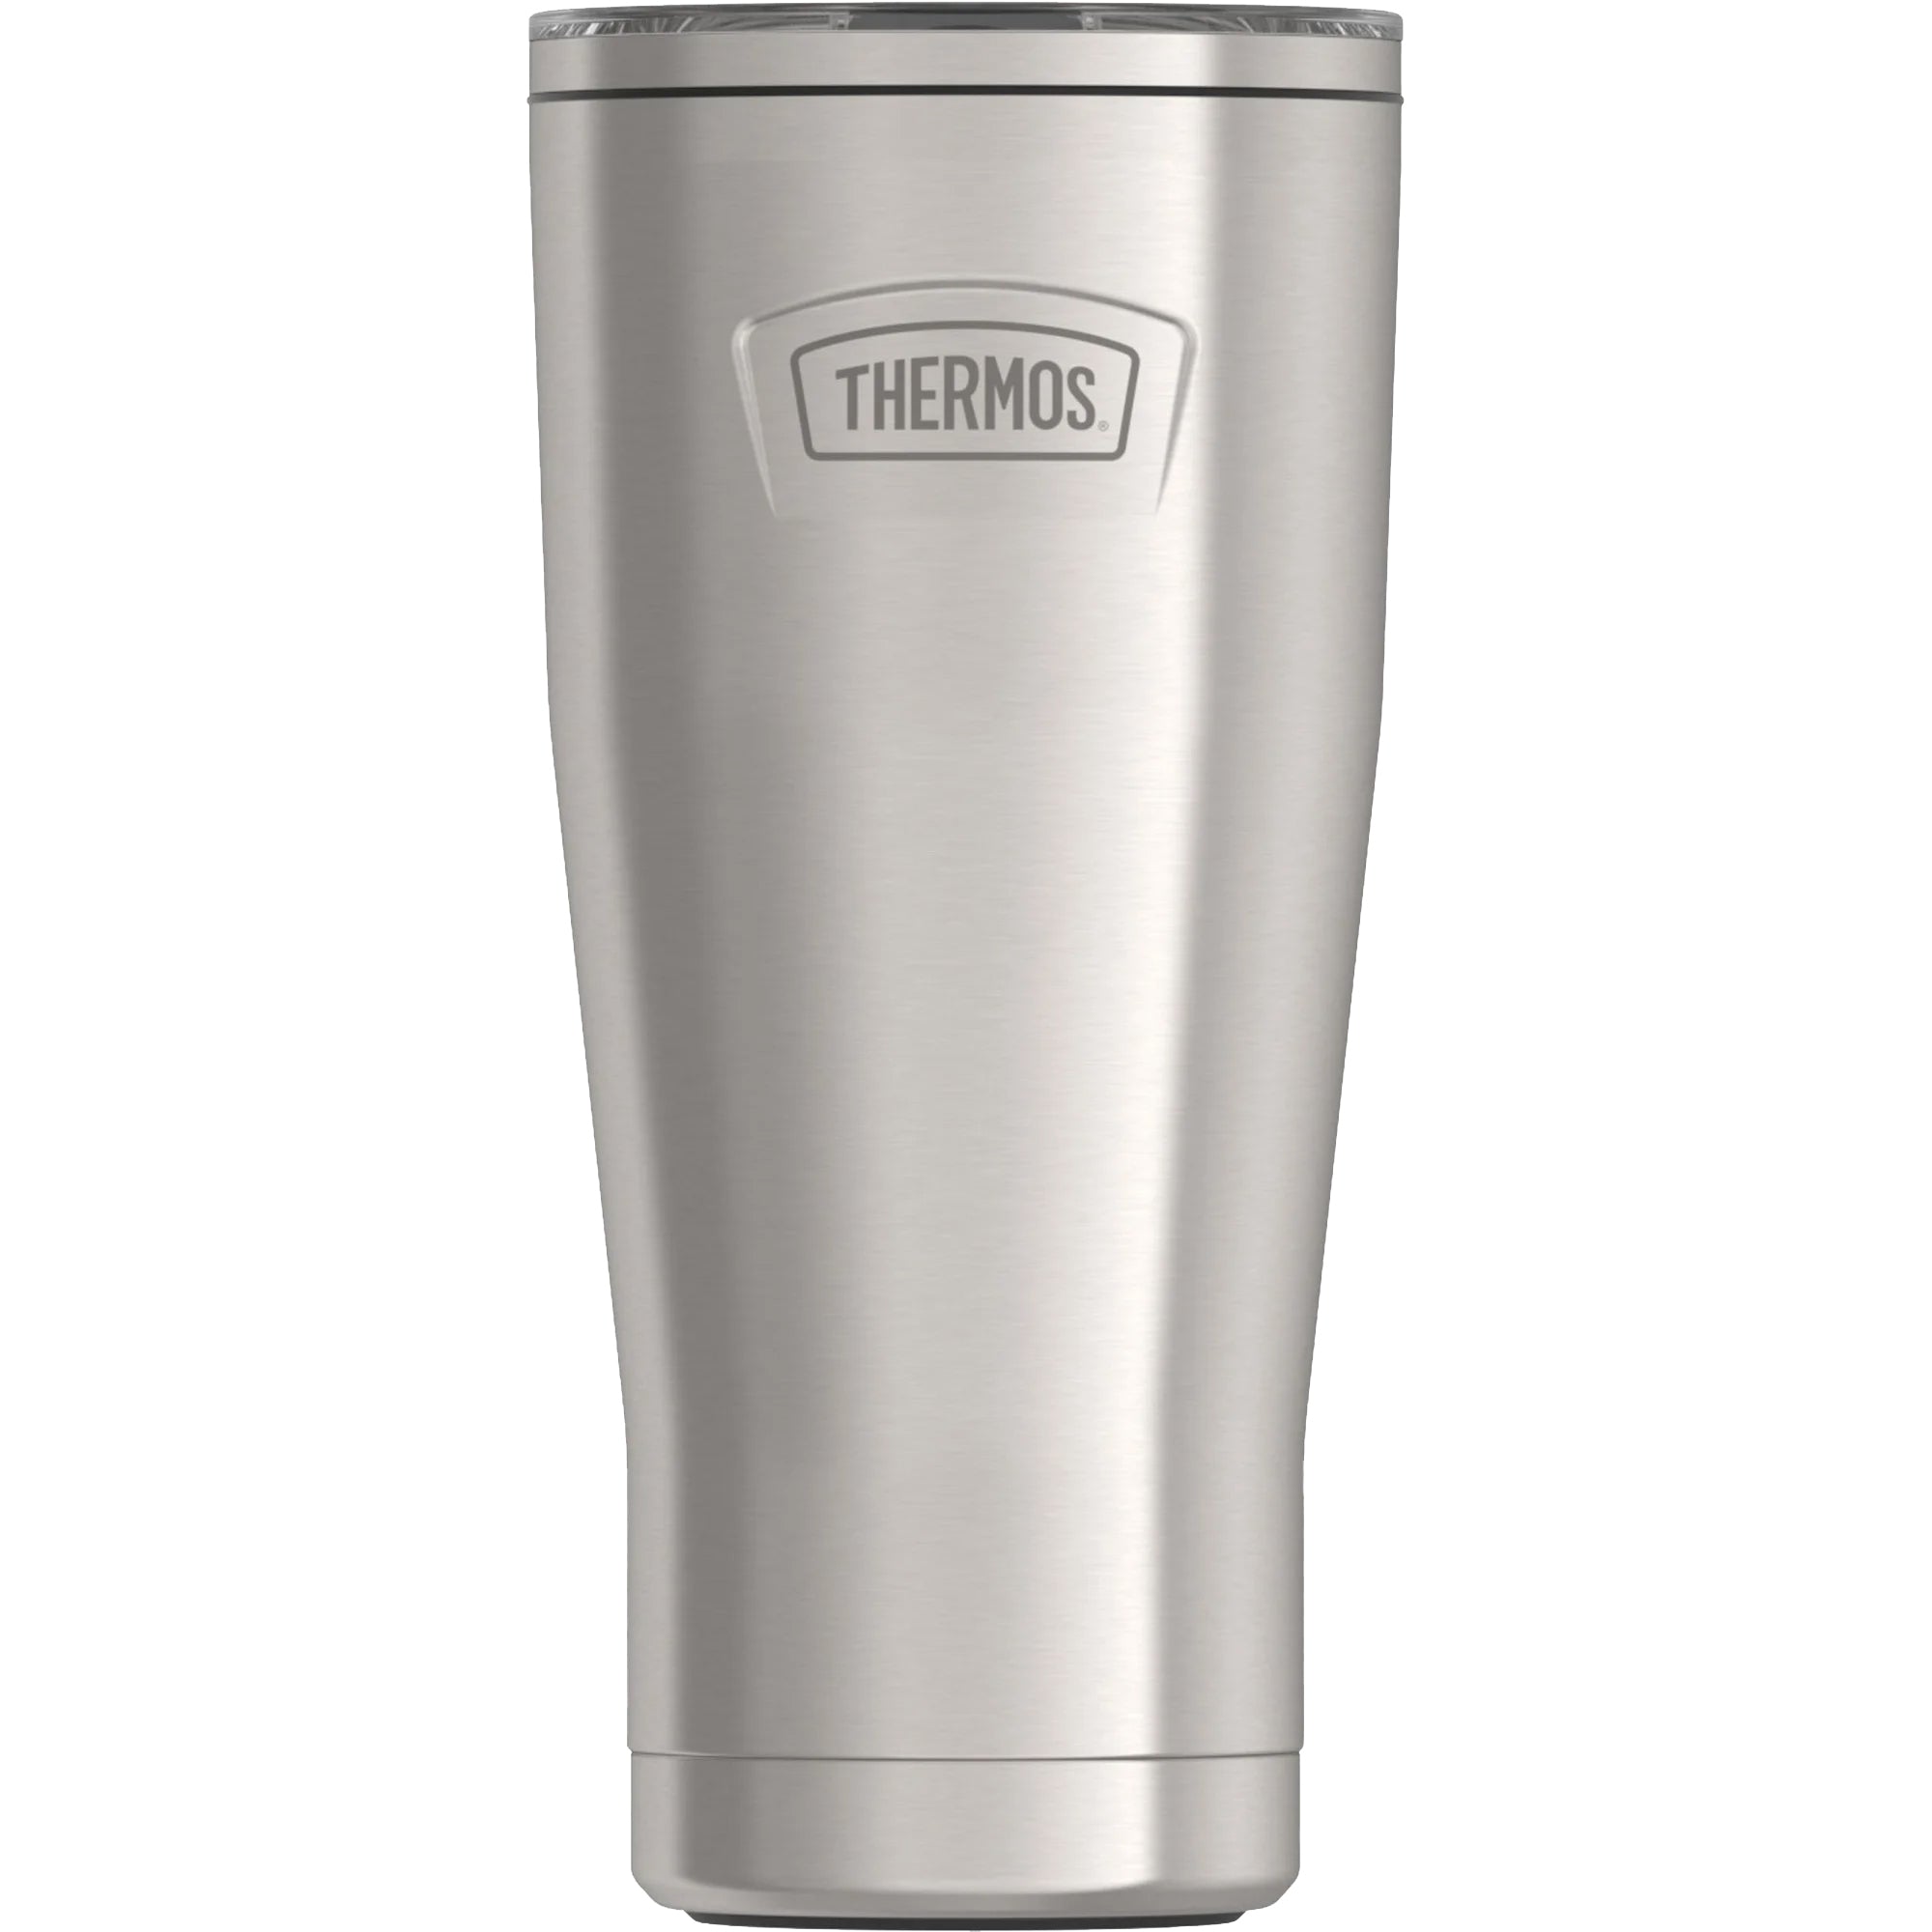 Thermos ICON Series Stainless Steel Vacuum Insulated Mug, 16oz, Saddle 